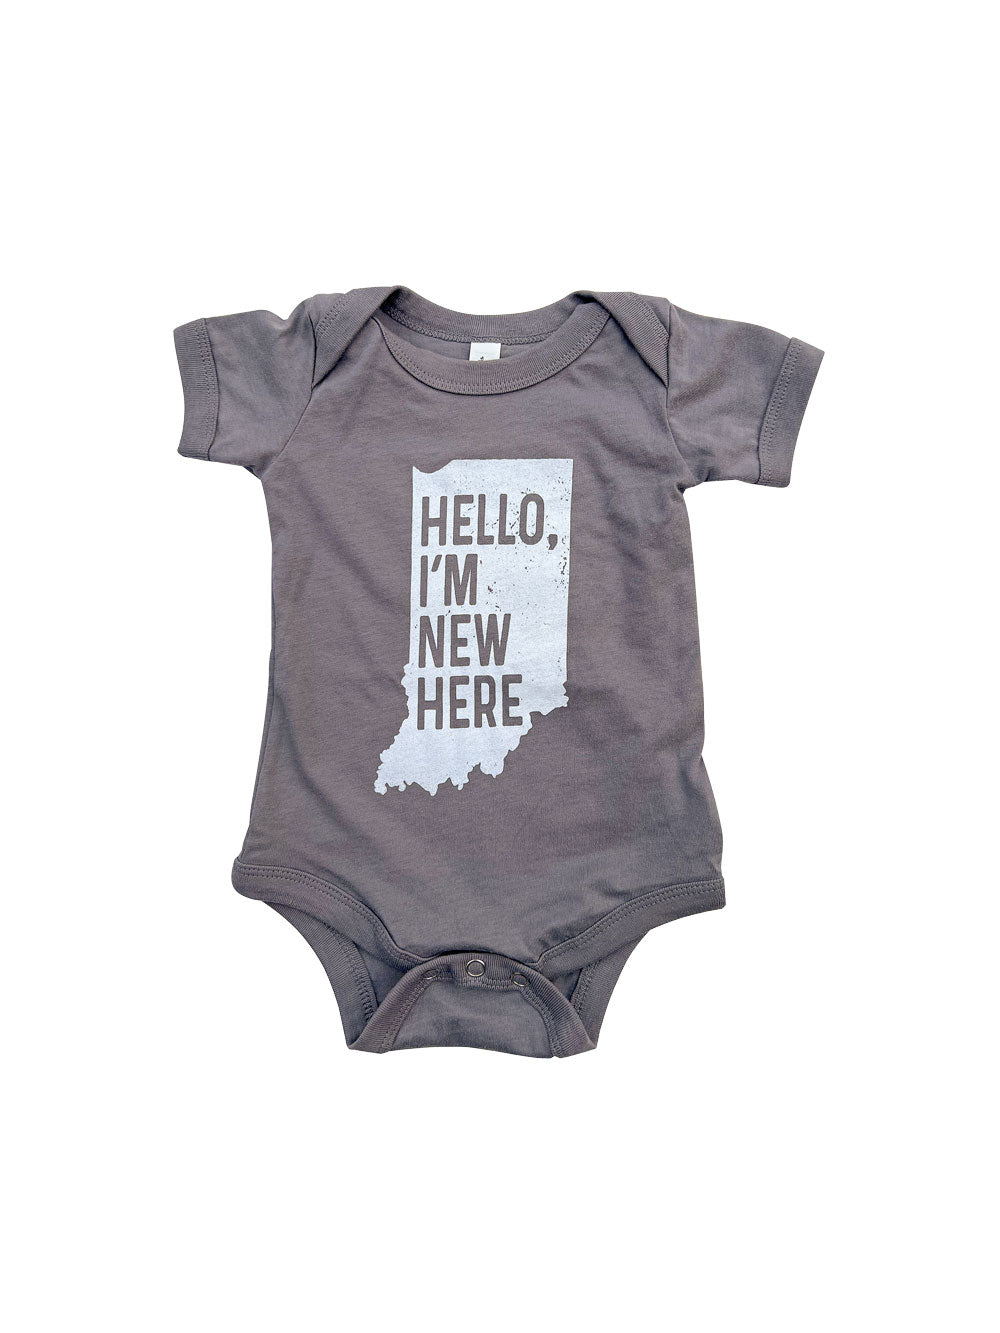 Hello, I'm New Here (Indiana) Infant Onesie